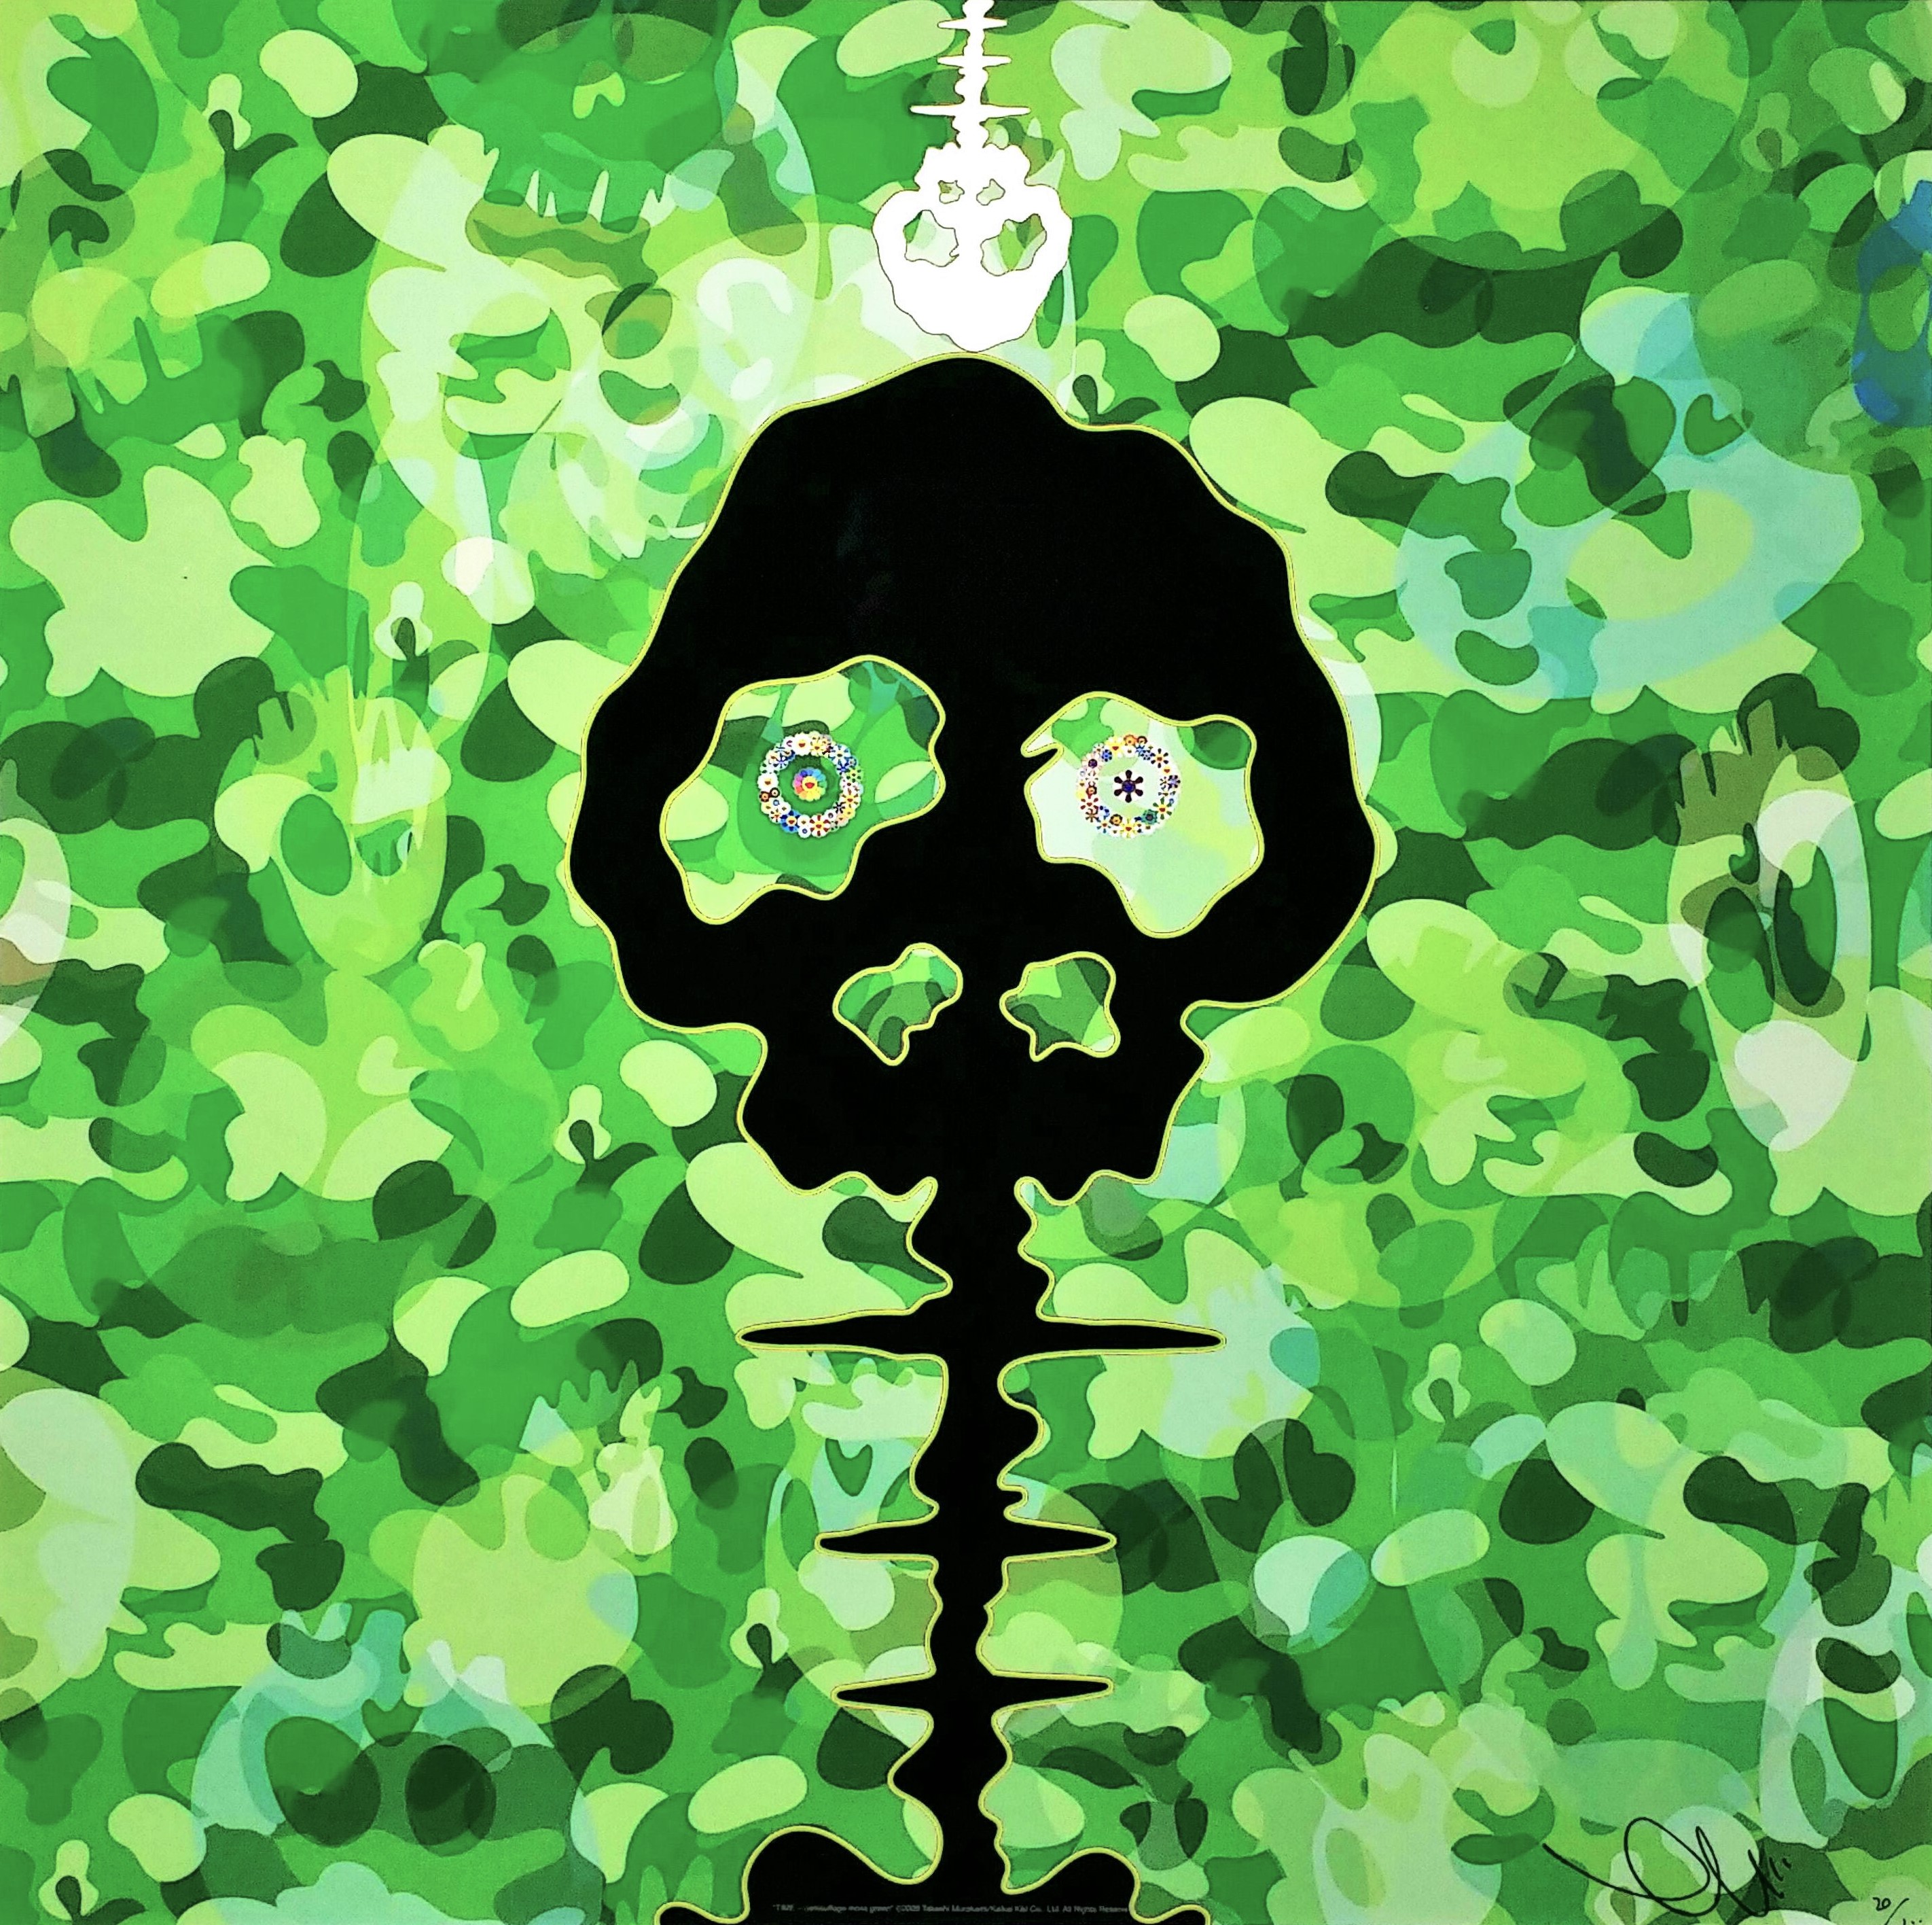 TIME-camouflage-moss-green」オフセットリトグラフ49×49cm1.jpg